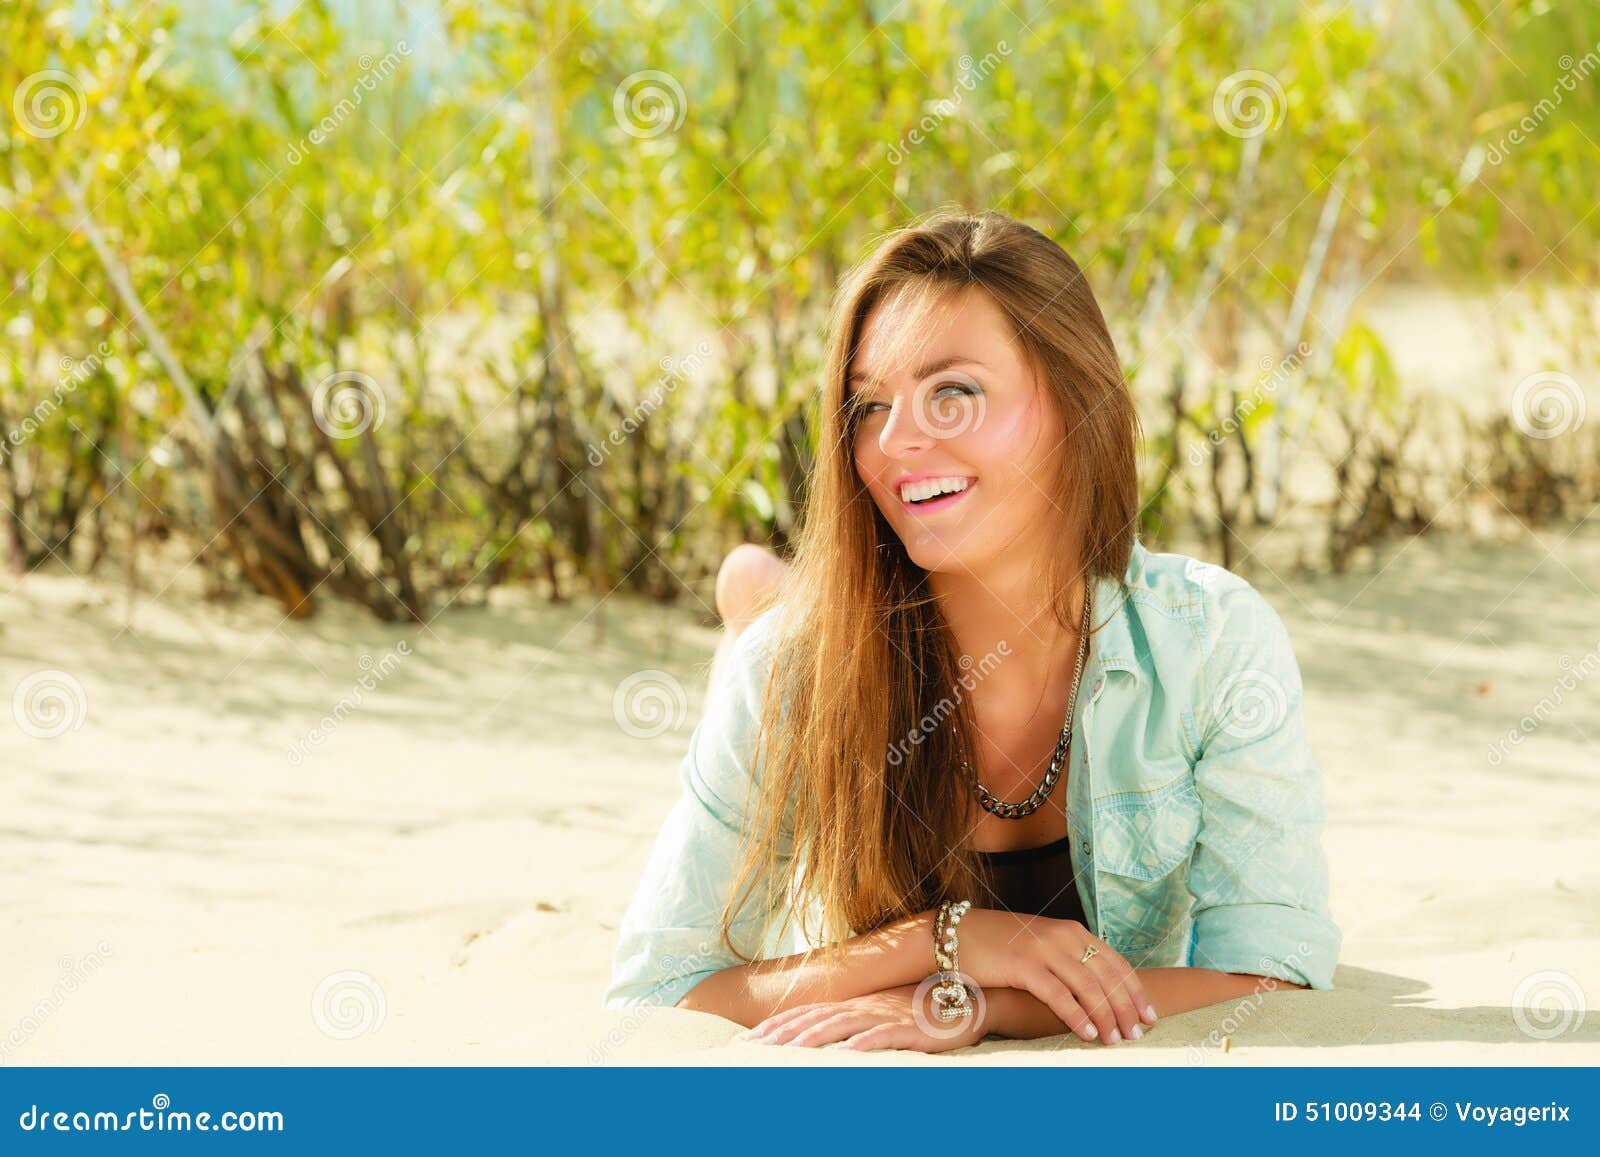 Young Woman Lying on Grassy Dune Stock Photo - Image of beachwear, girl ...